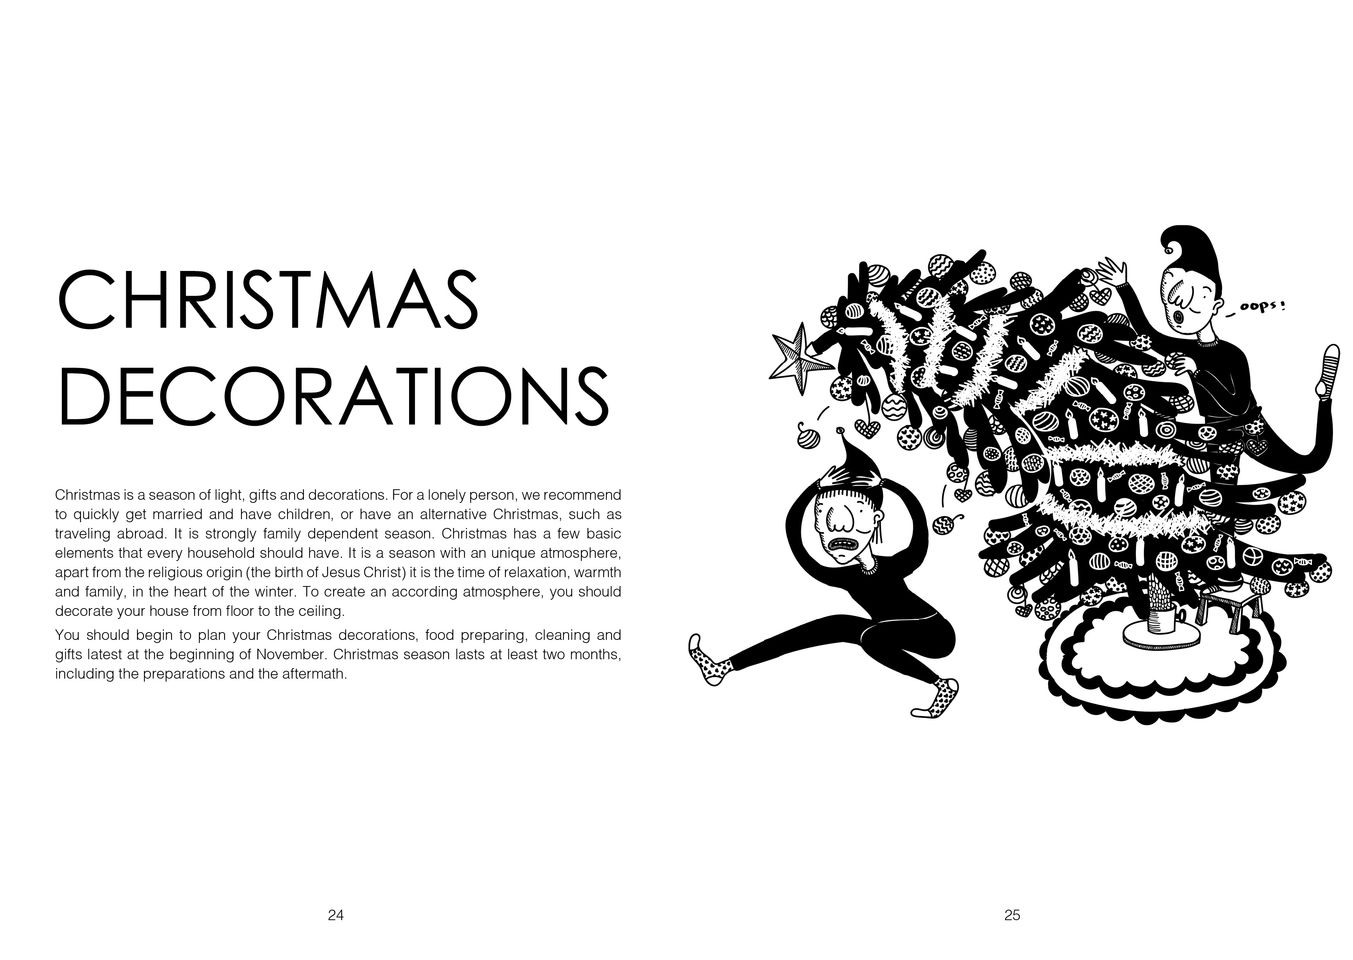 Christmas decoration introduction 